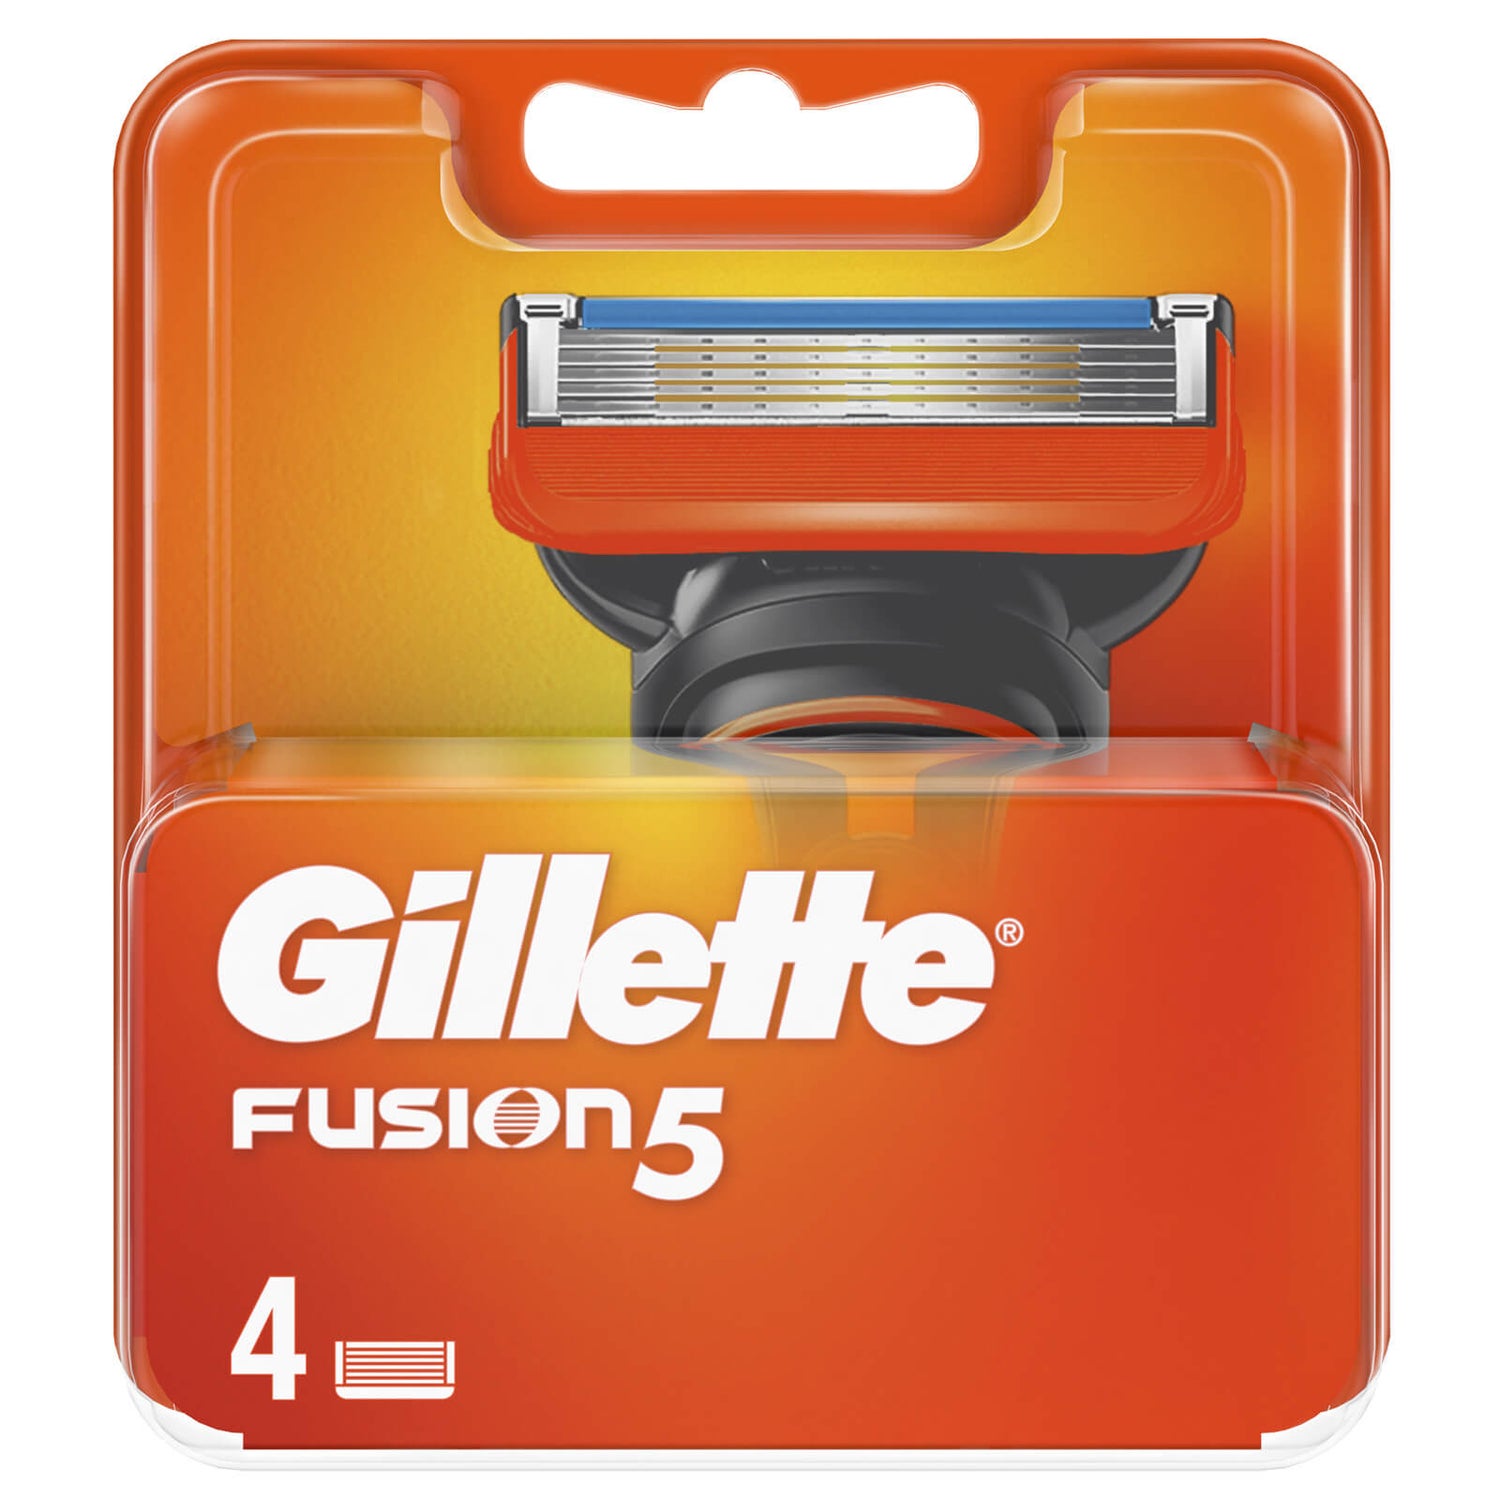 Gillette Fusion5 Blades Subscription - 4 Pack